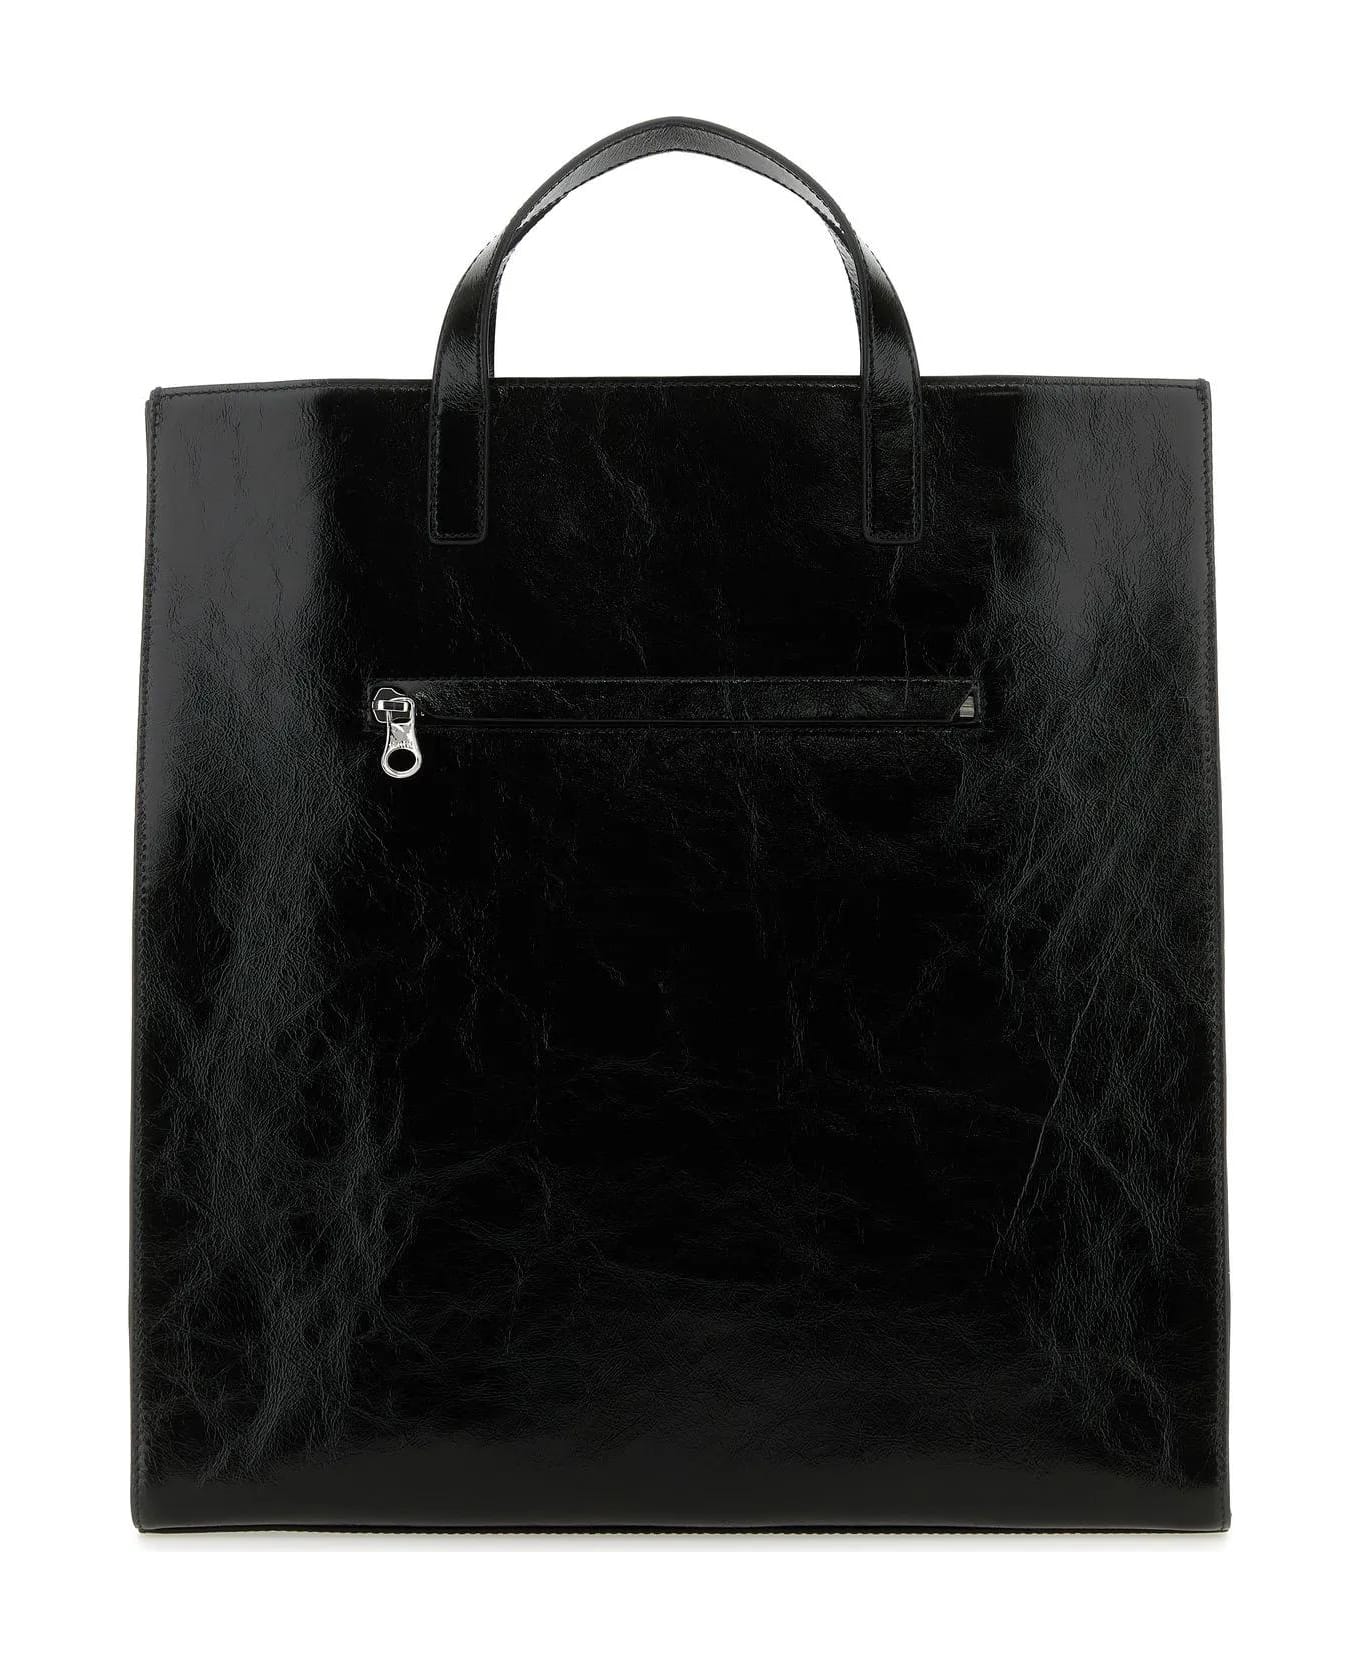 Courrèges Black Leather Heritage Shopping Bag - Black